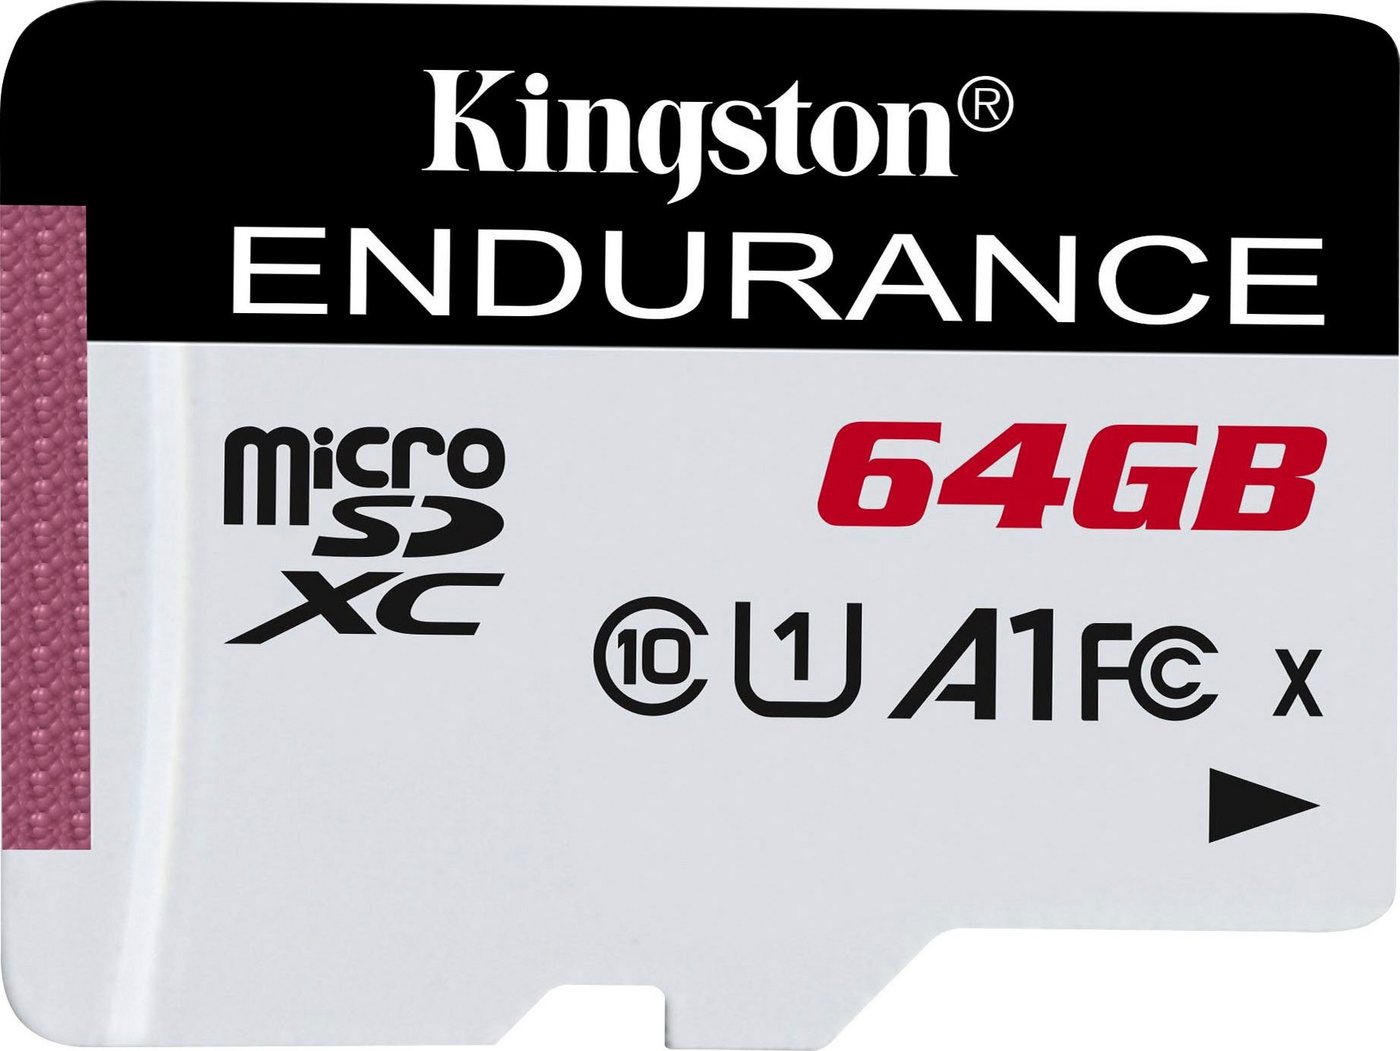 Kingston HIGH-ENDURANCE microSD 64GB Speicherkarte (64 GB, UHS-I Class 10, 95 MB/s Lesegeschwindigkeit) von Kingston